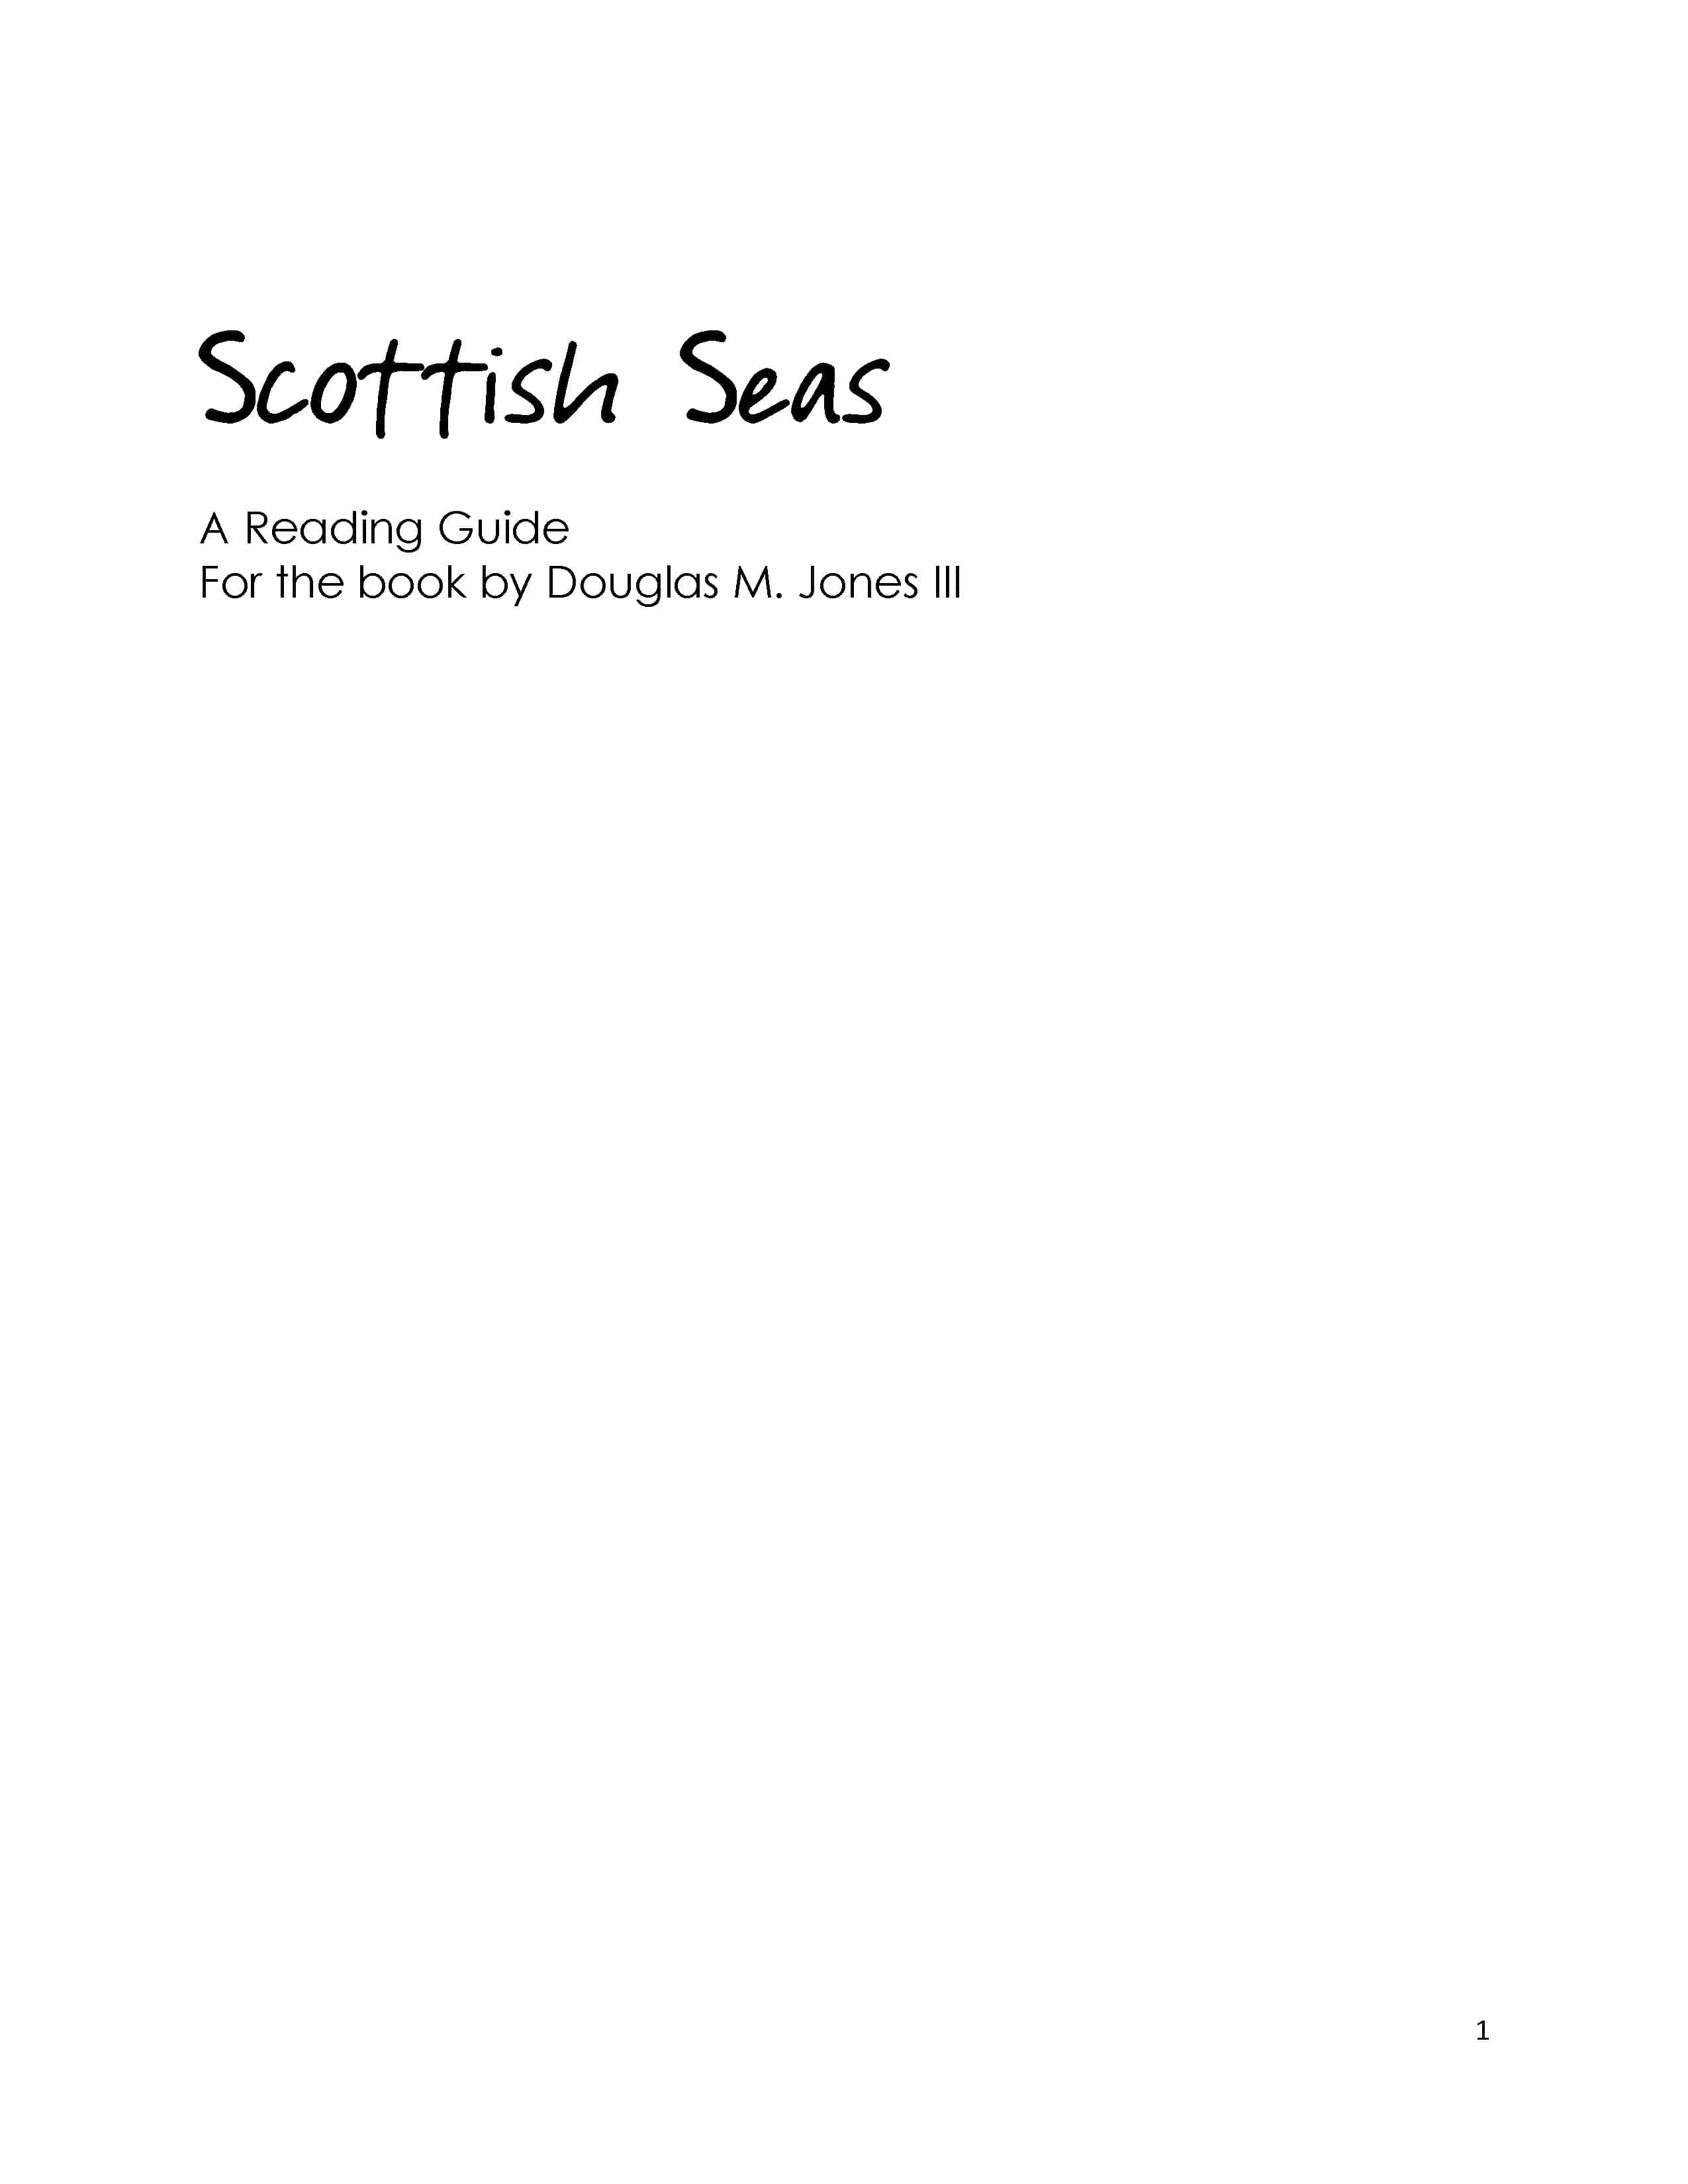 Scottish Seas Reading Guide (Download)